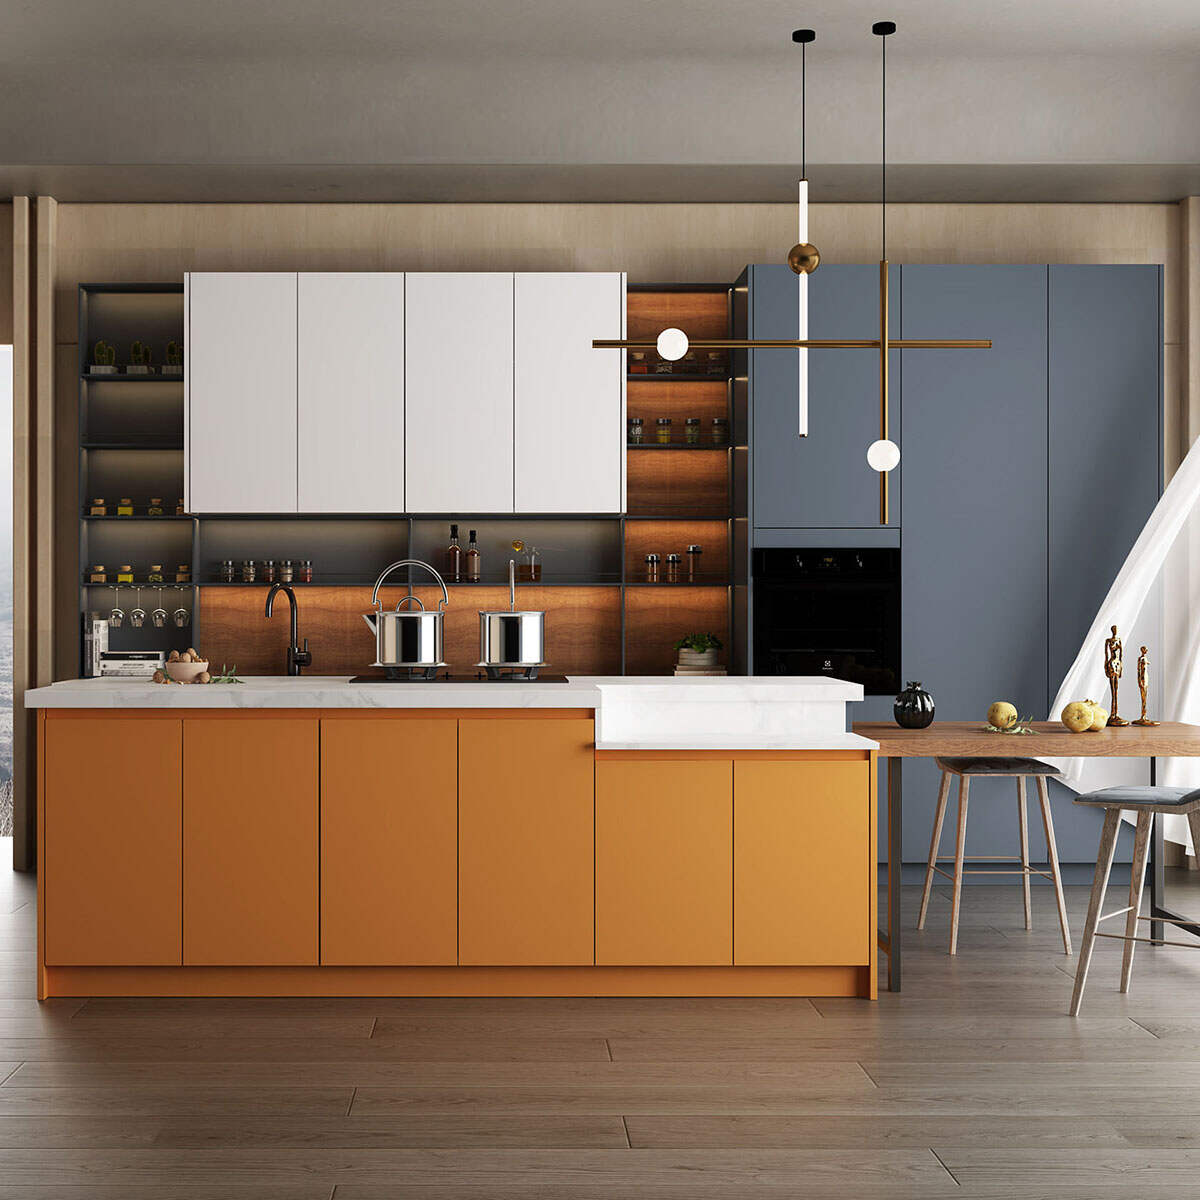 Luxury Stainless Steel Kitchen Cupboards Modern Kitchen Cabinets With Island